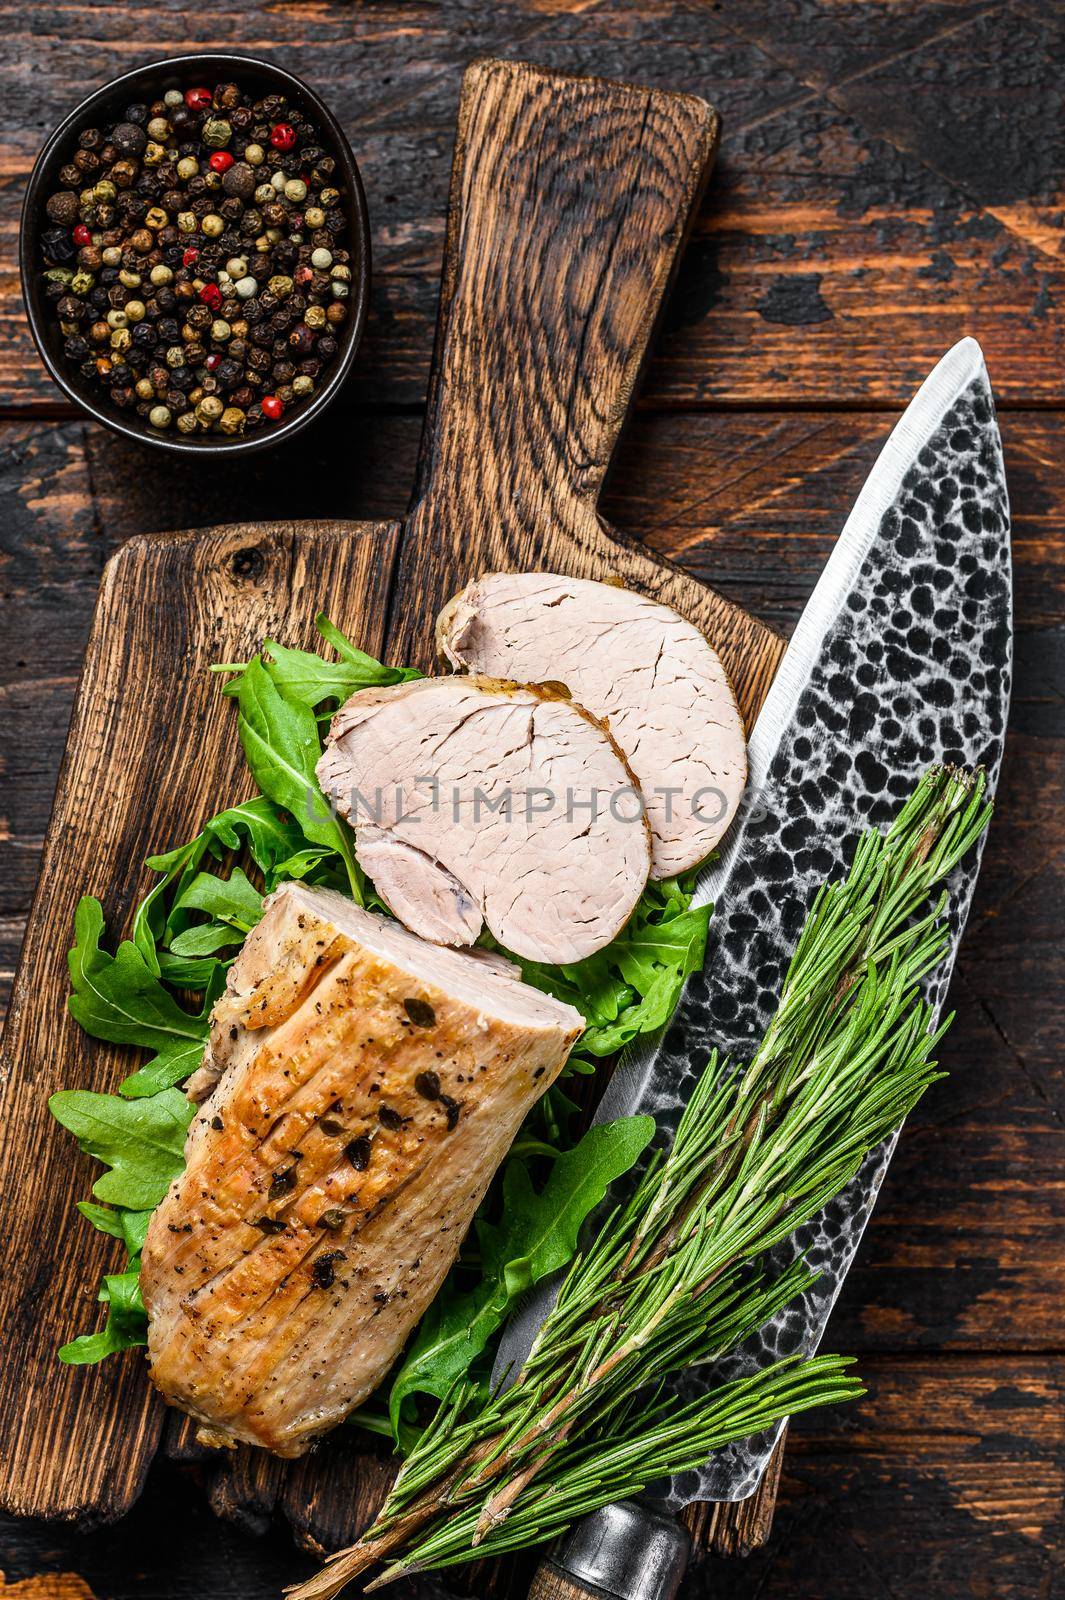 Cut baked pork tenderloin steak on a cutting board with arugula. Dark background. Top view.